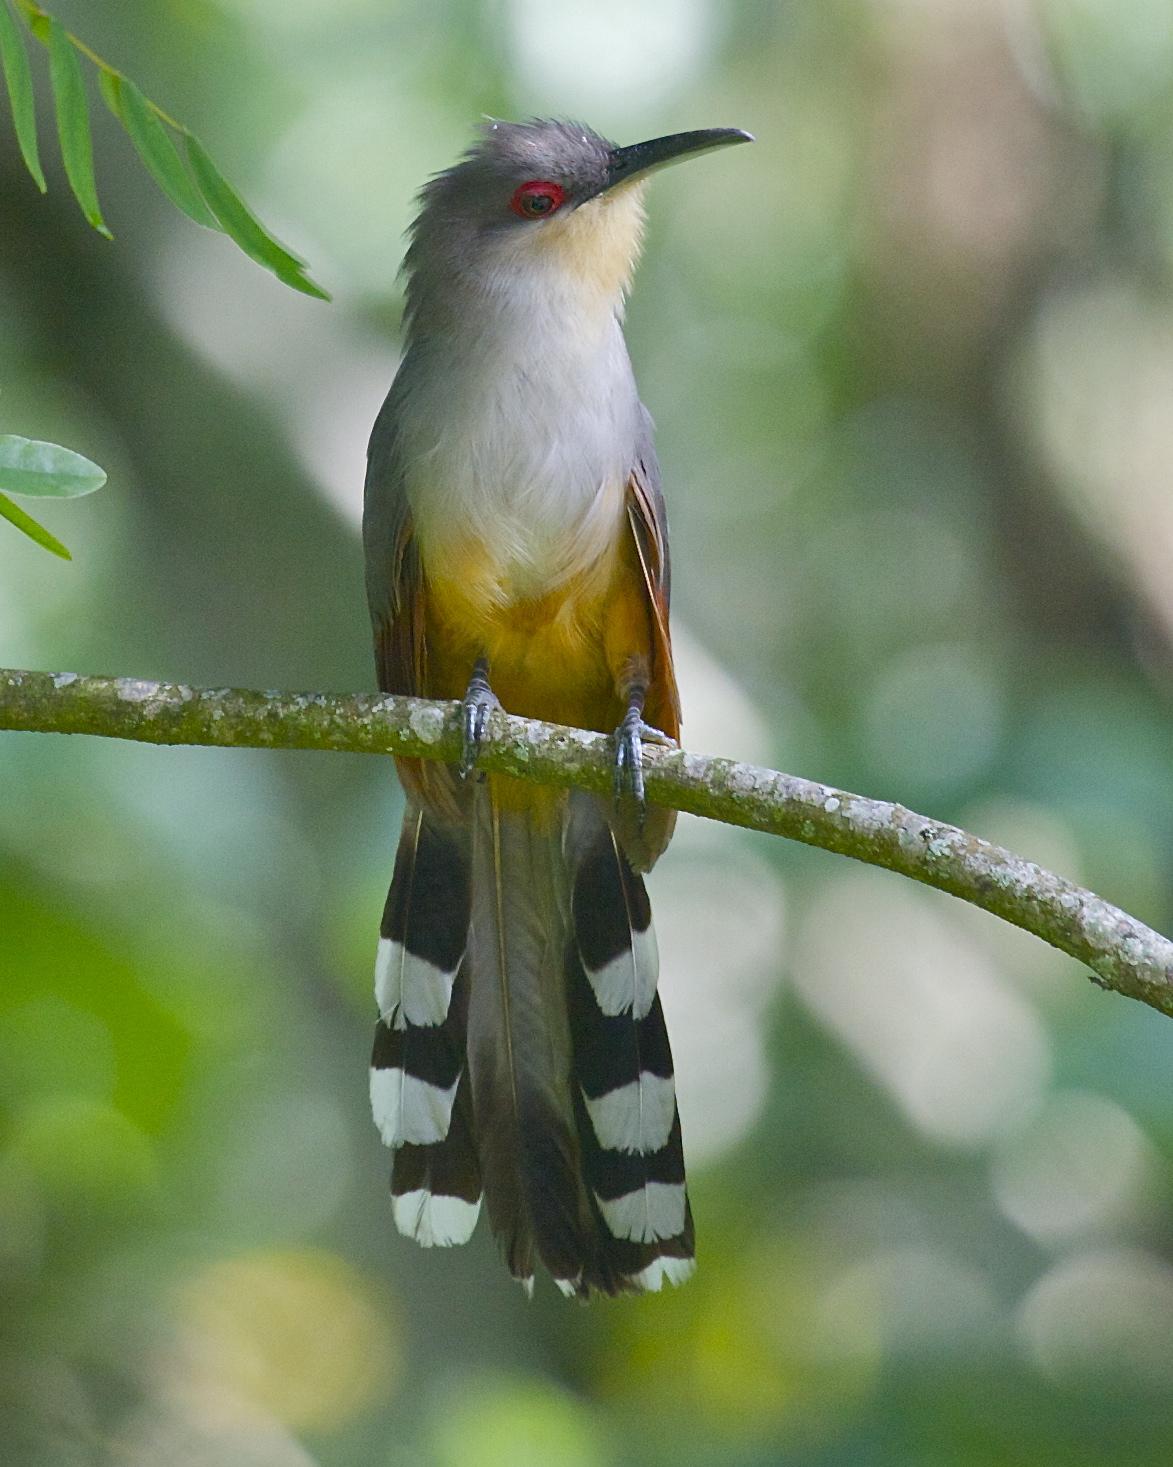 Hispaniolan Lizard-Cuckoo Photo by Mitch Walters